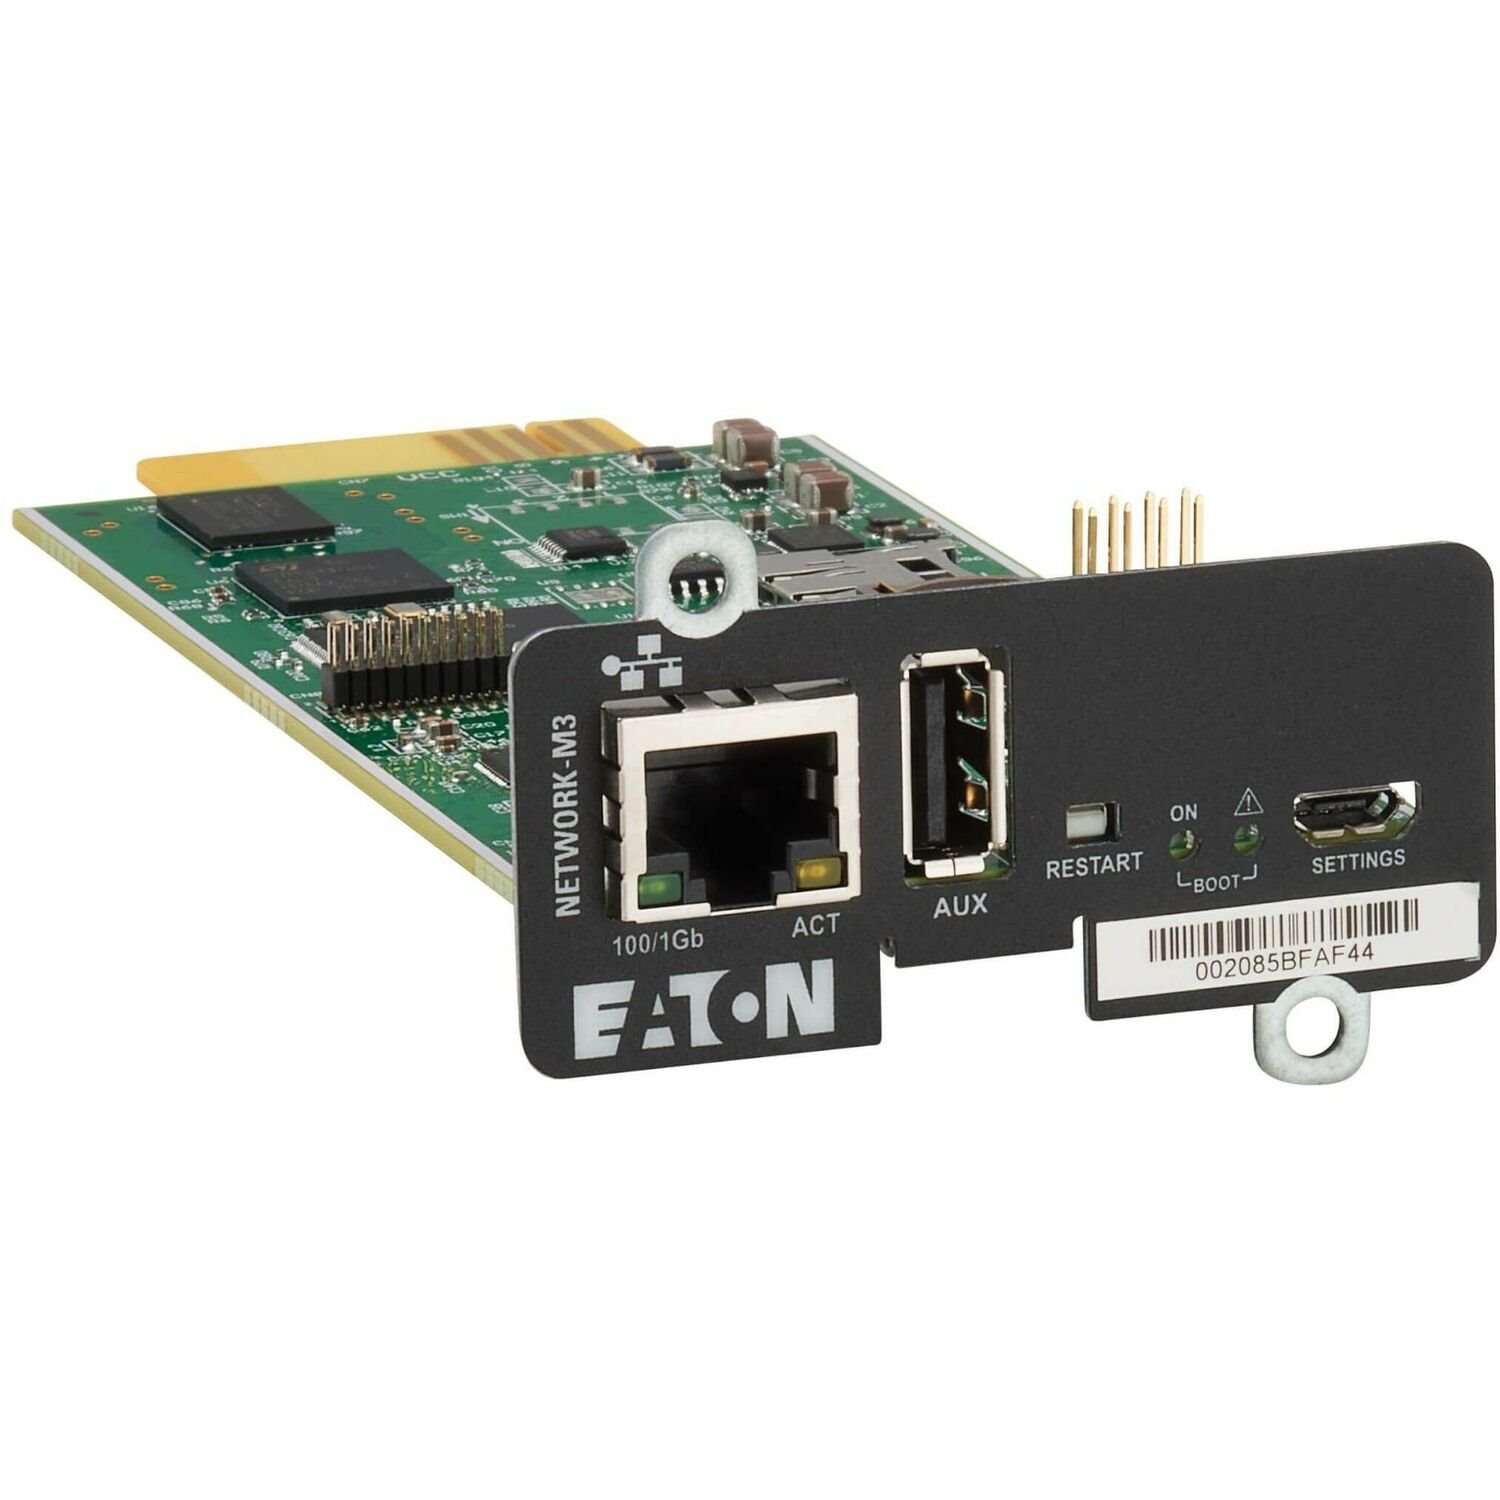 Eaton Gigabit Ethernet Card for UPS/PDU - 1000Base-T